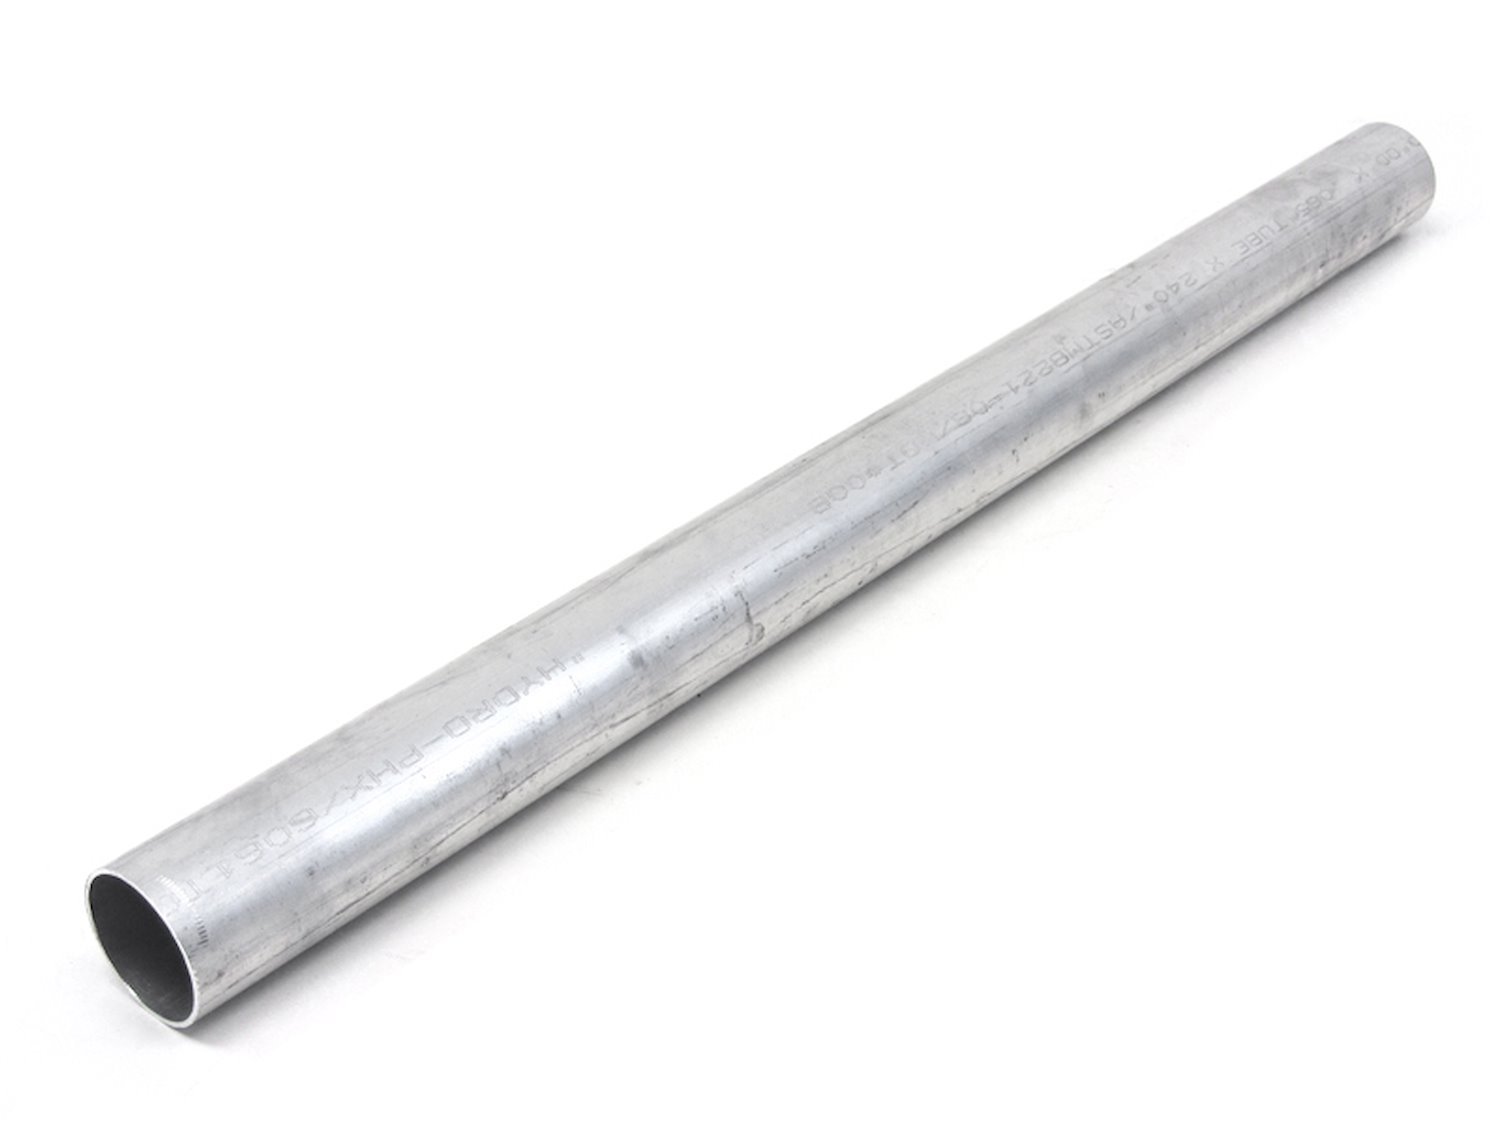 AST-162 Aluminum Tubing, 6061 Aluminum, Straight Tubing, 1-5/8 in. OD, Seamless, Raw Finish, 1 ft. Long